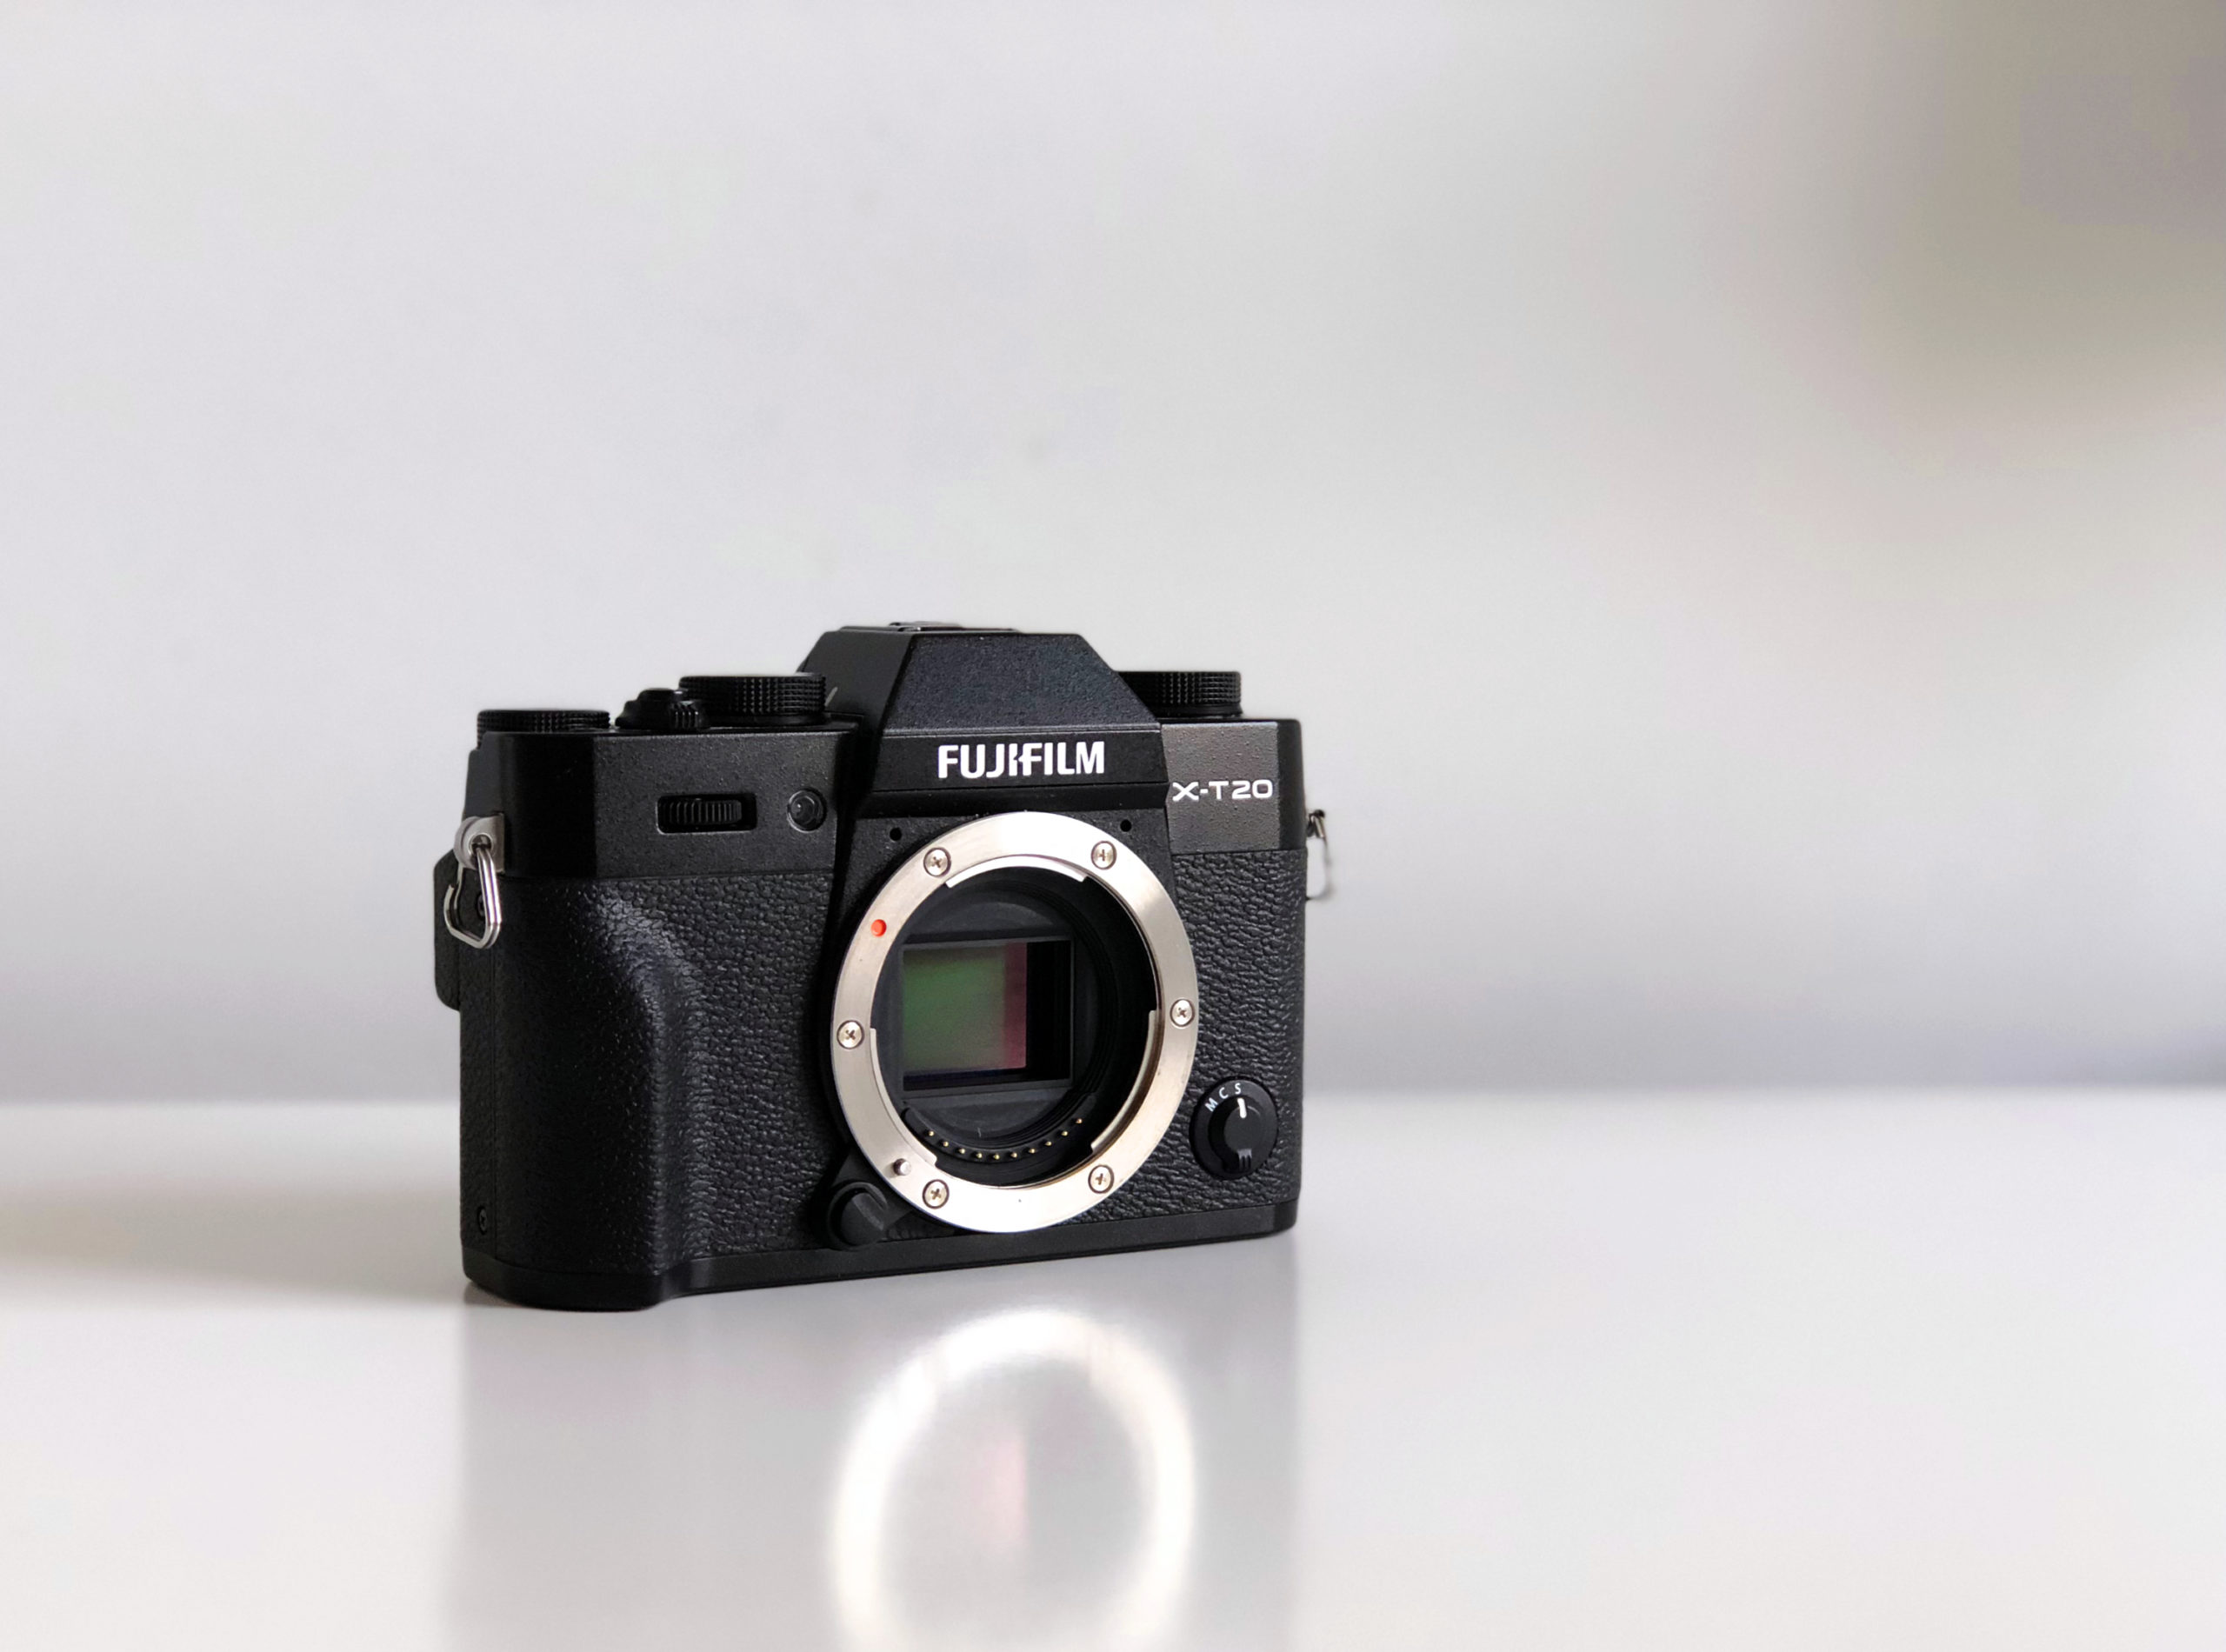 Fujifilm X-T20 body in black color